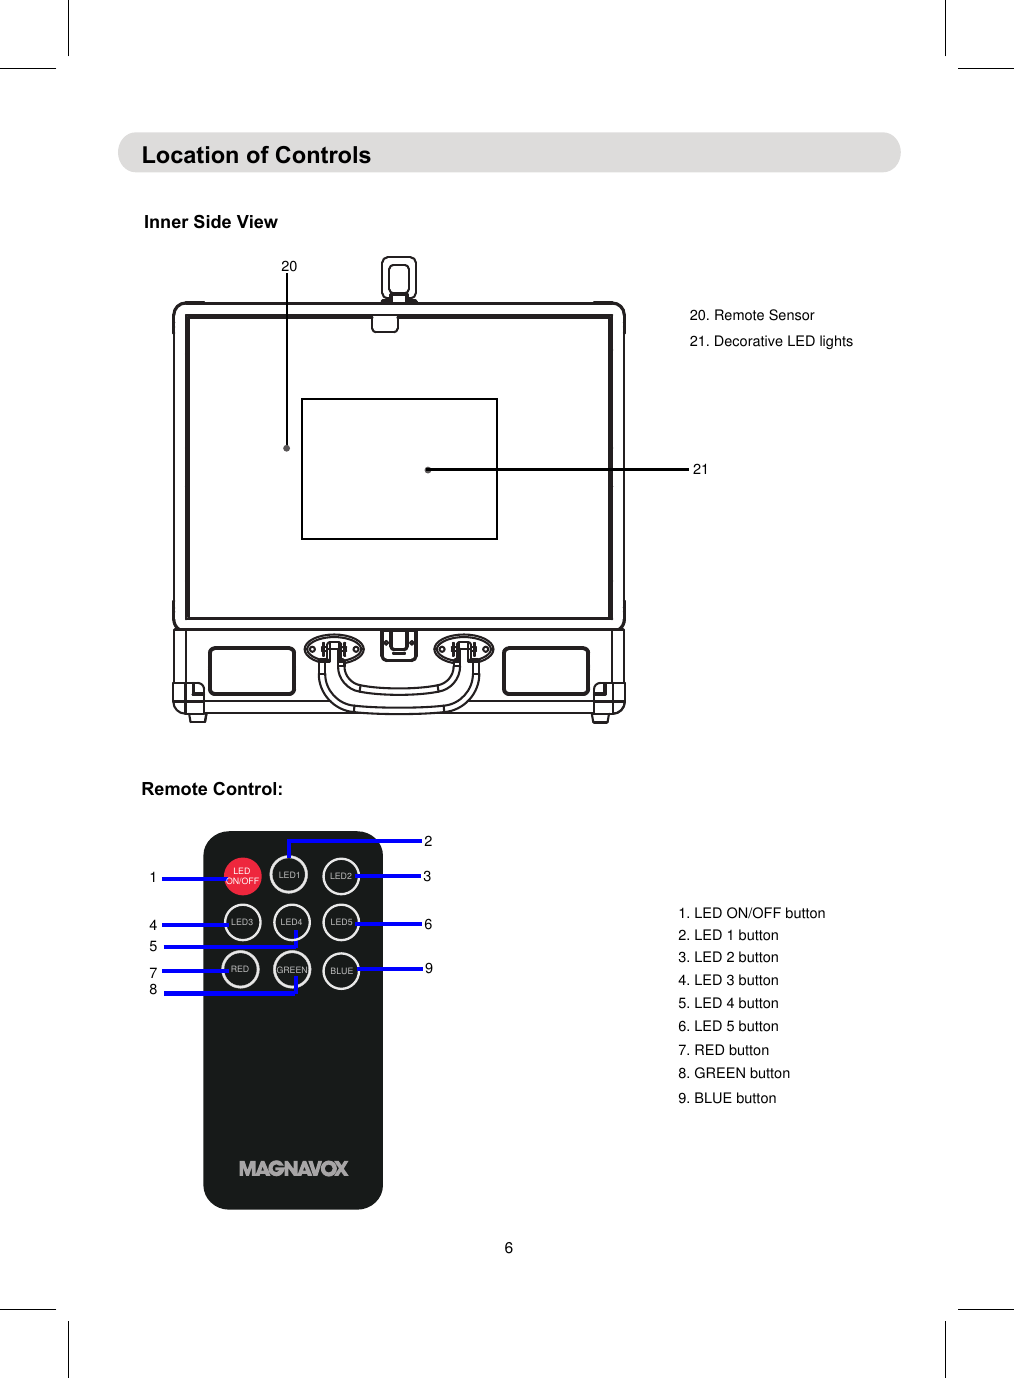 Location of Controls20. Remote SensorInner Side View2021LED ON/OFF LED1 LED2LED3 LED4 LED5RED GREEN BLUE1234567891. LED ON/OFF button2. LED 1 button3. LED 2 button4. LED 3 button5. LED 4 button6. LED 5 button7. RED button8. GREEN button9. BLUE button621. Decorative LED lightsRemote Control: